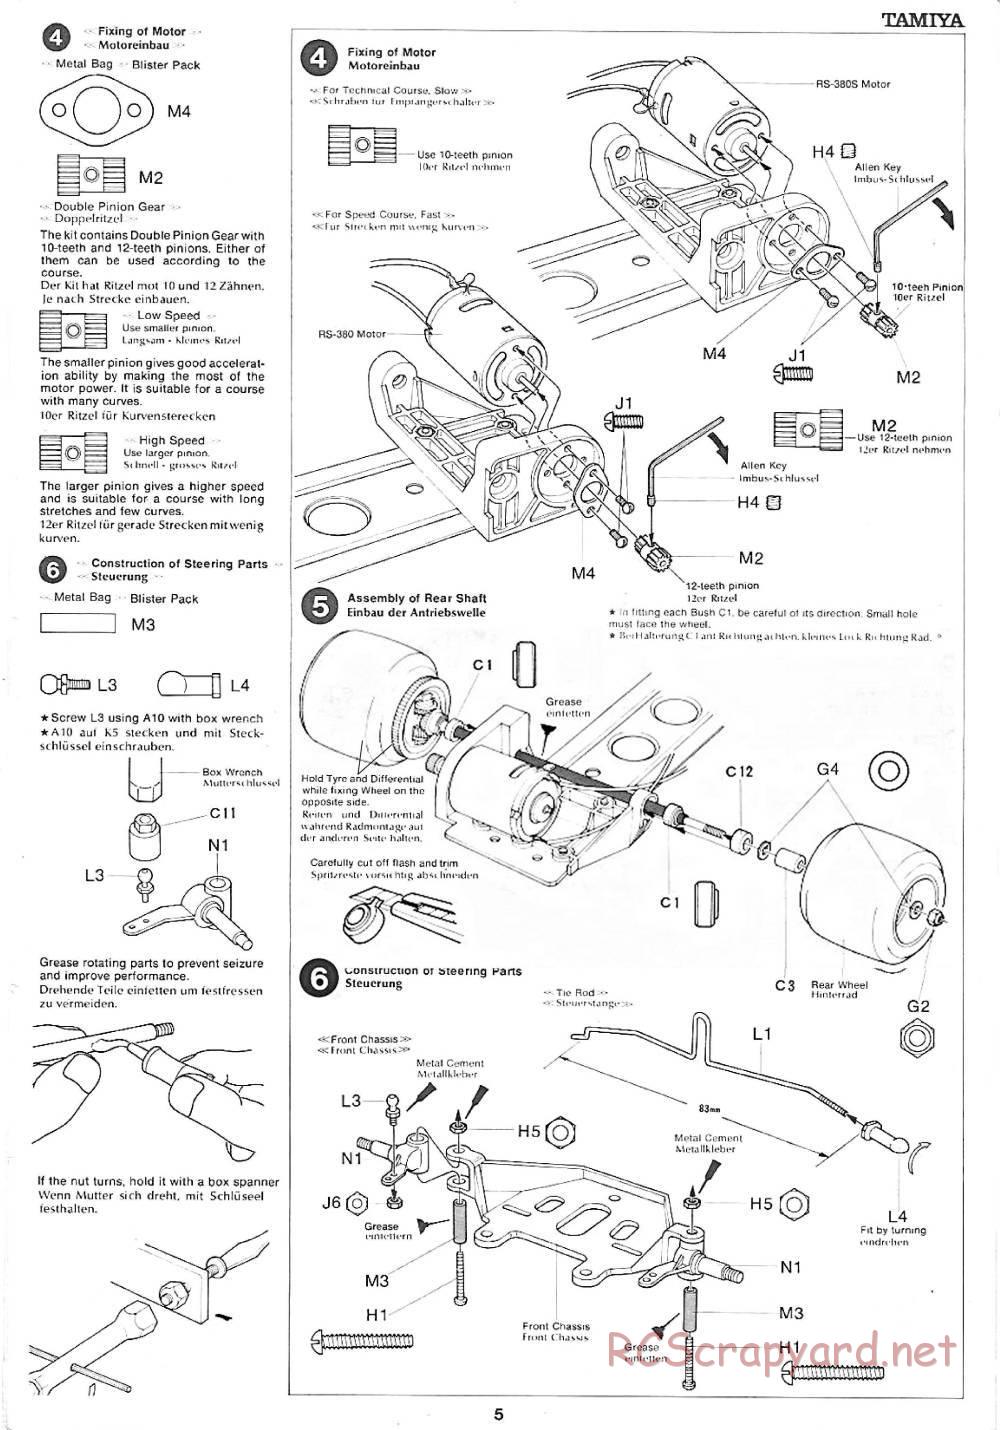 Tamiya - Ralt RT2 Hart 420R (F2) - 58018 - Manual - Page 5